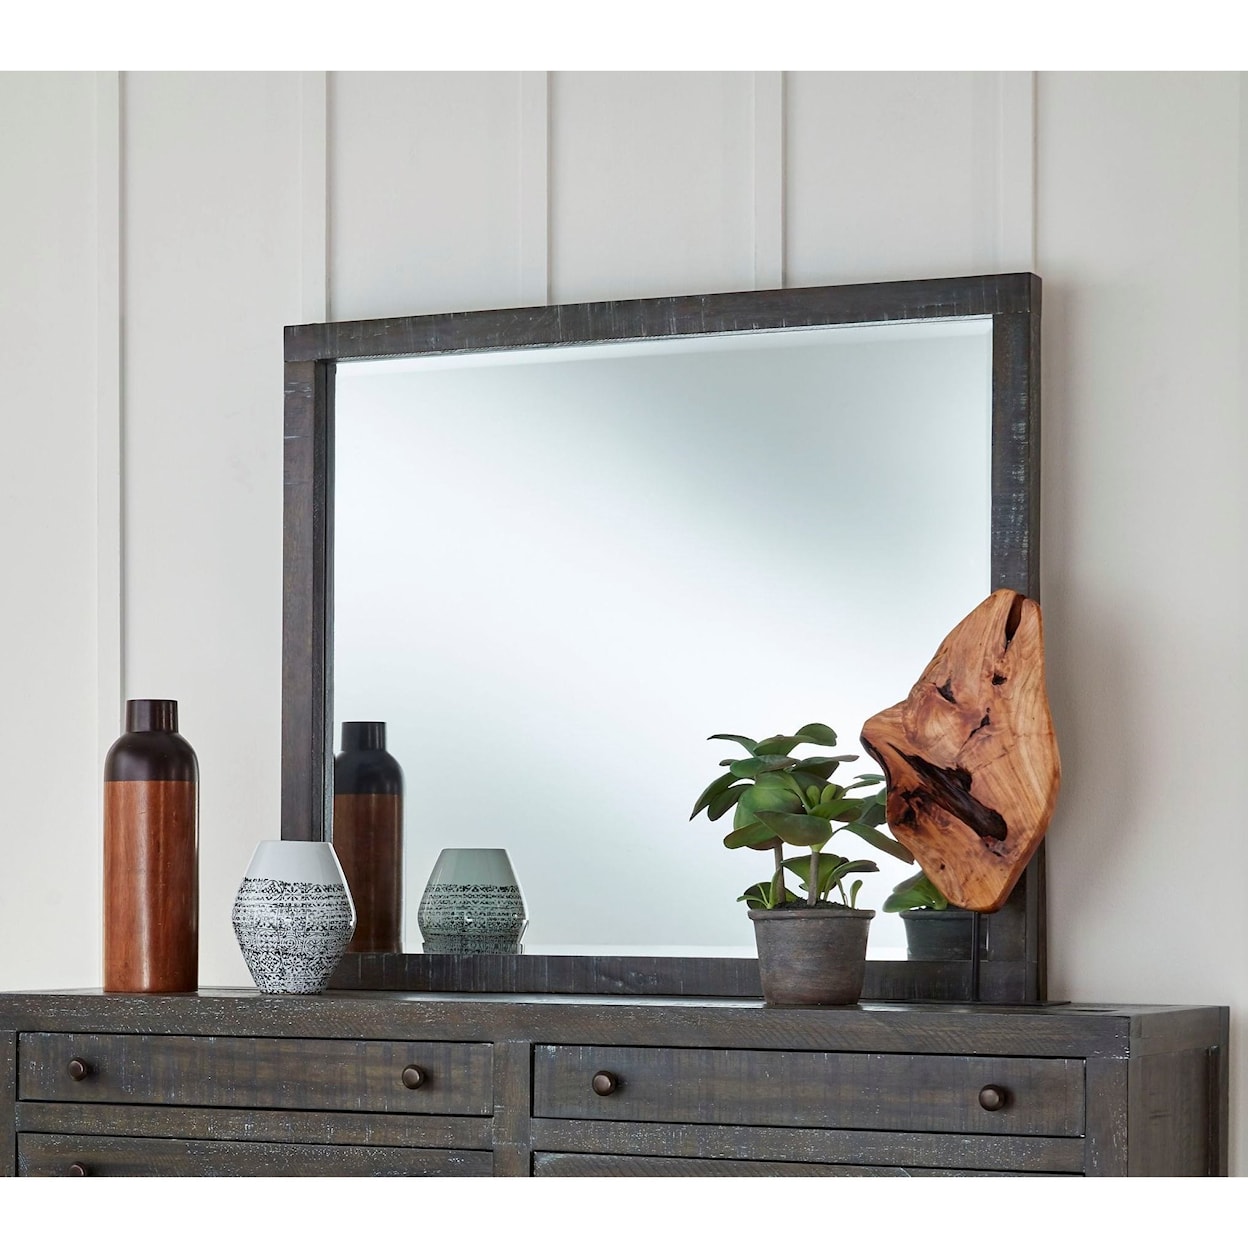 Modus International 12468 Mirror with Wood Frame